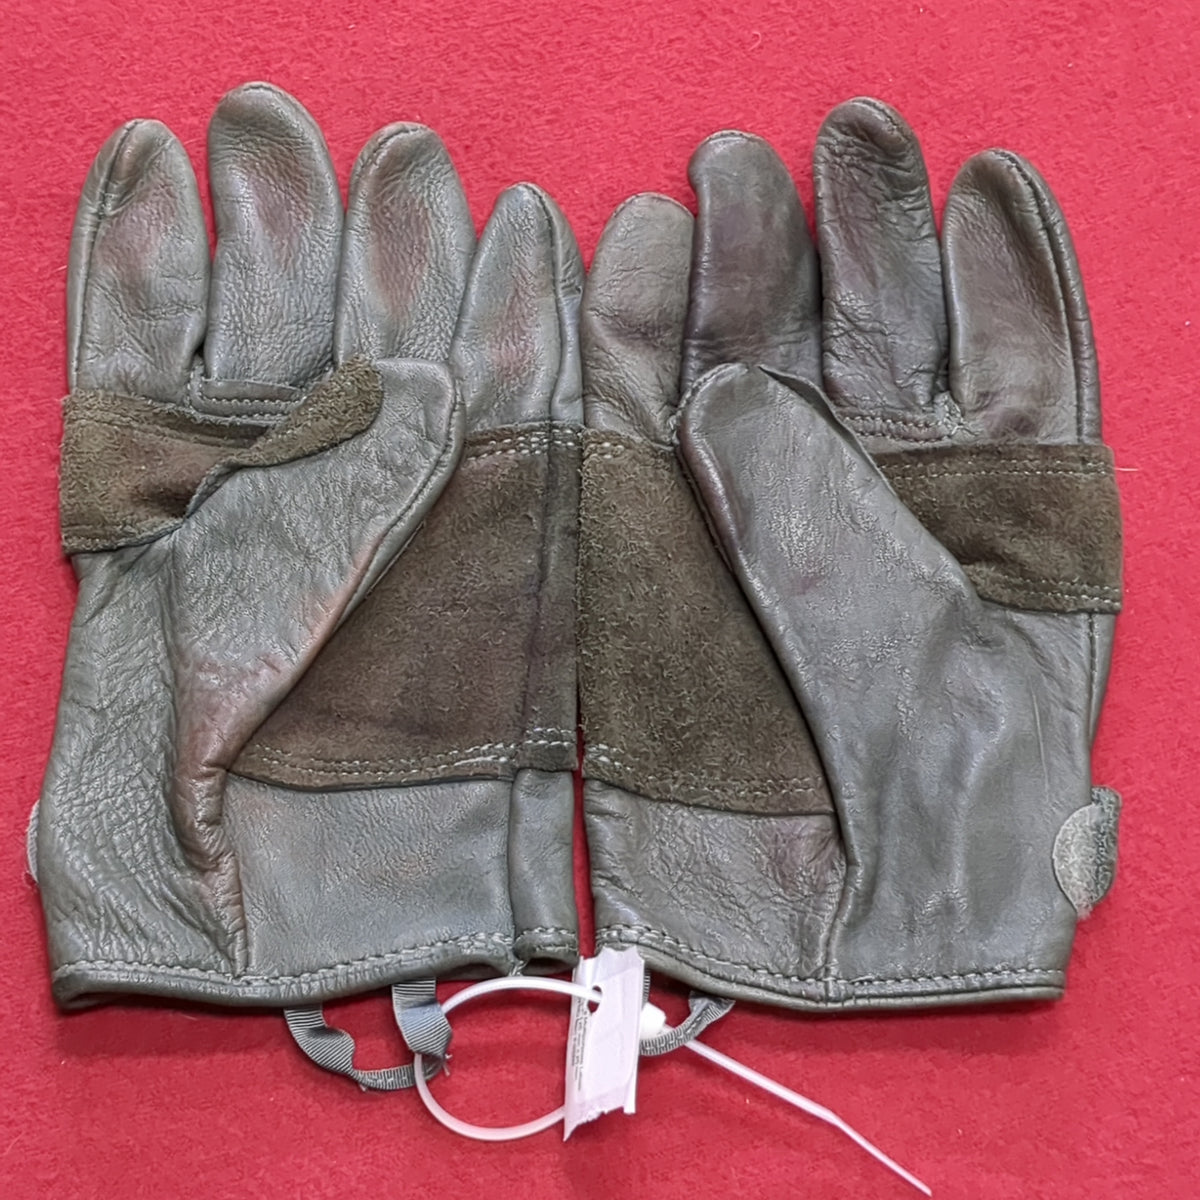 Army Light Duty Leather Work Glove- Black - Medium